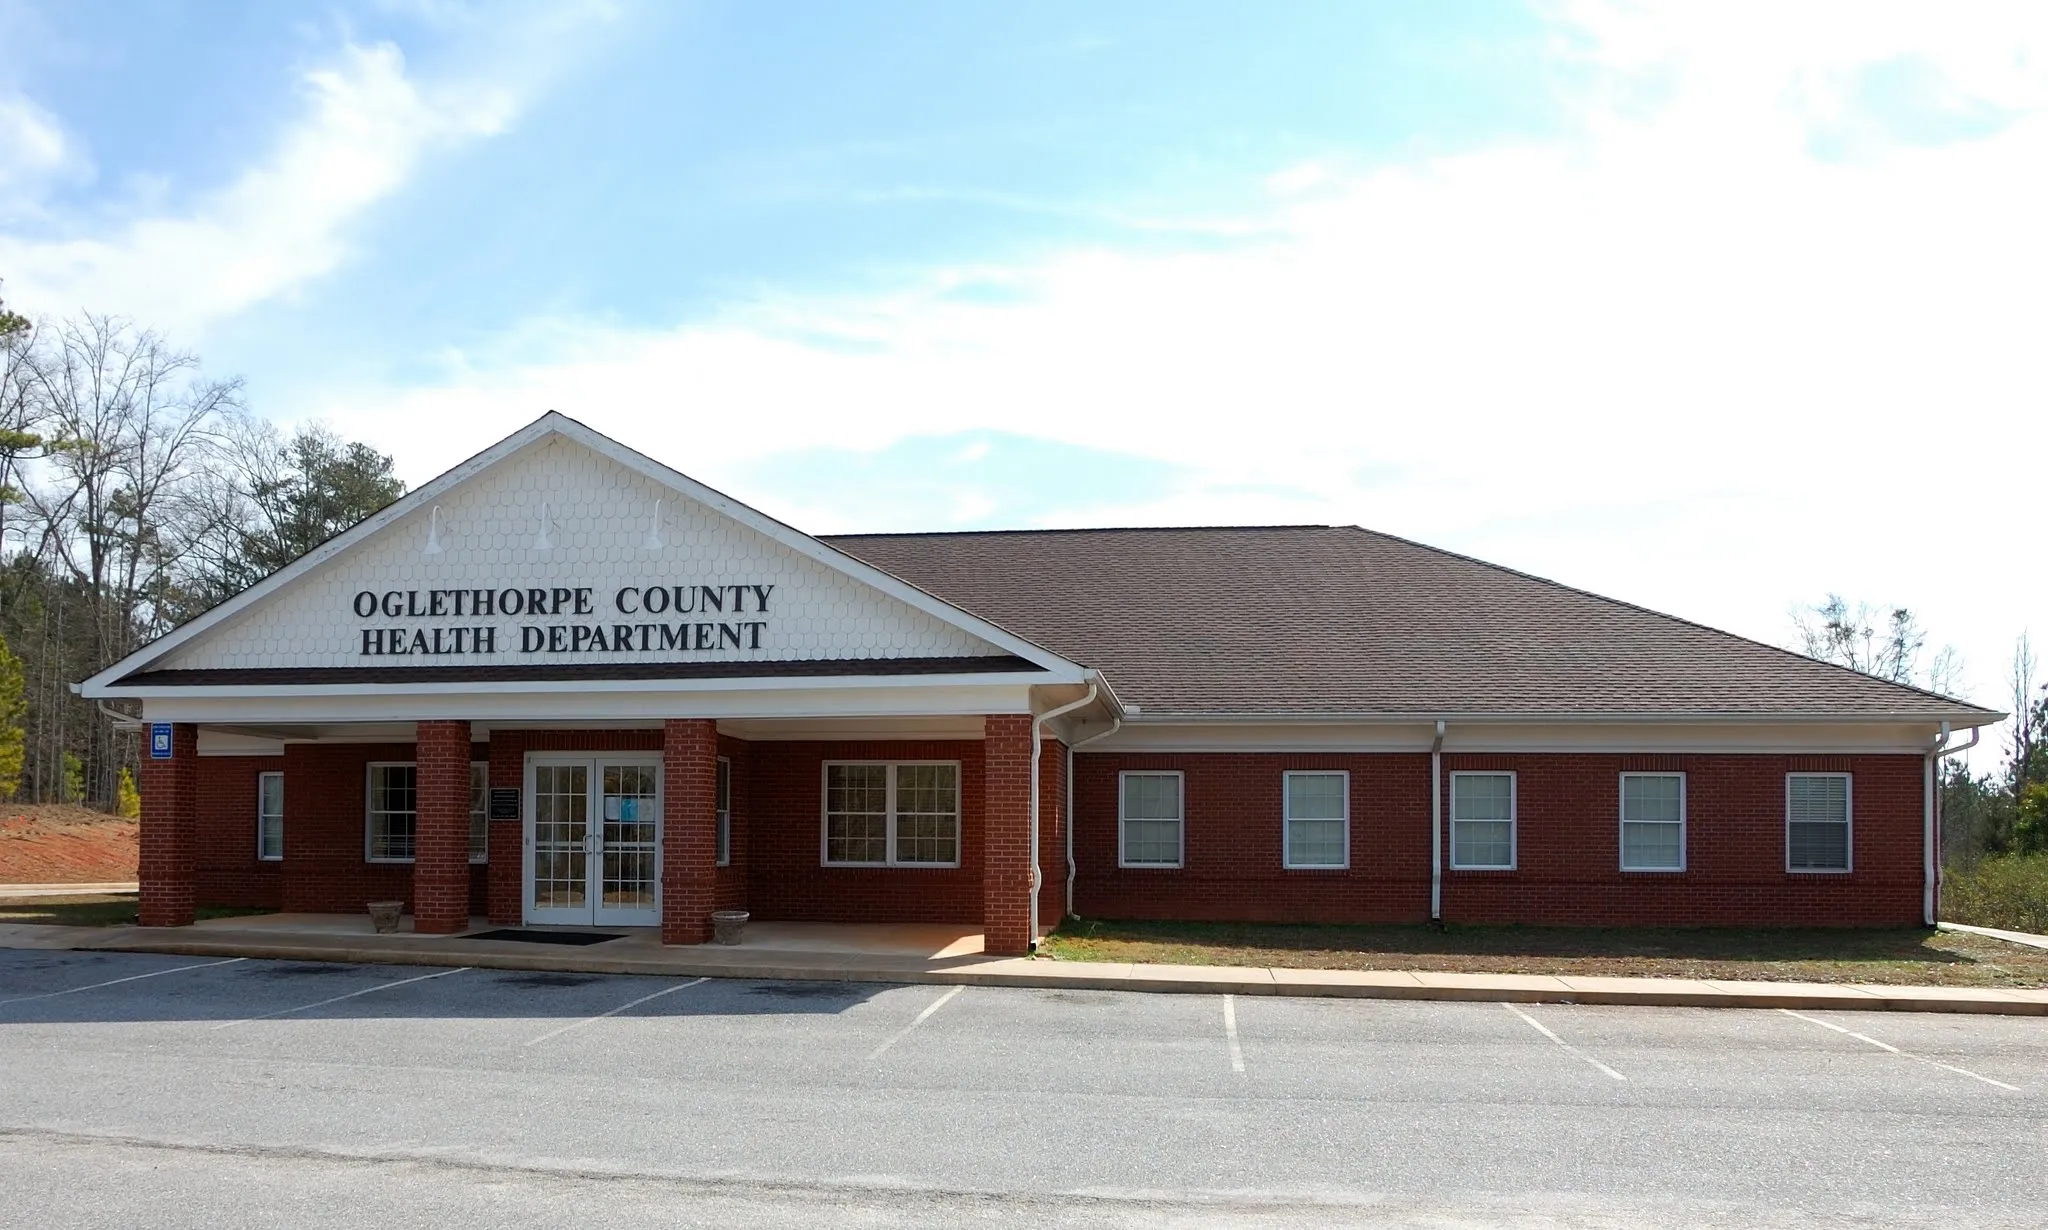 Oglethorpe County Health Department